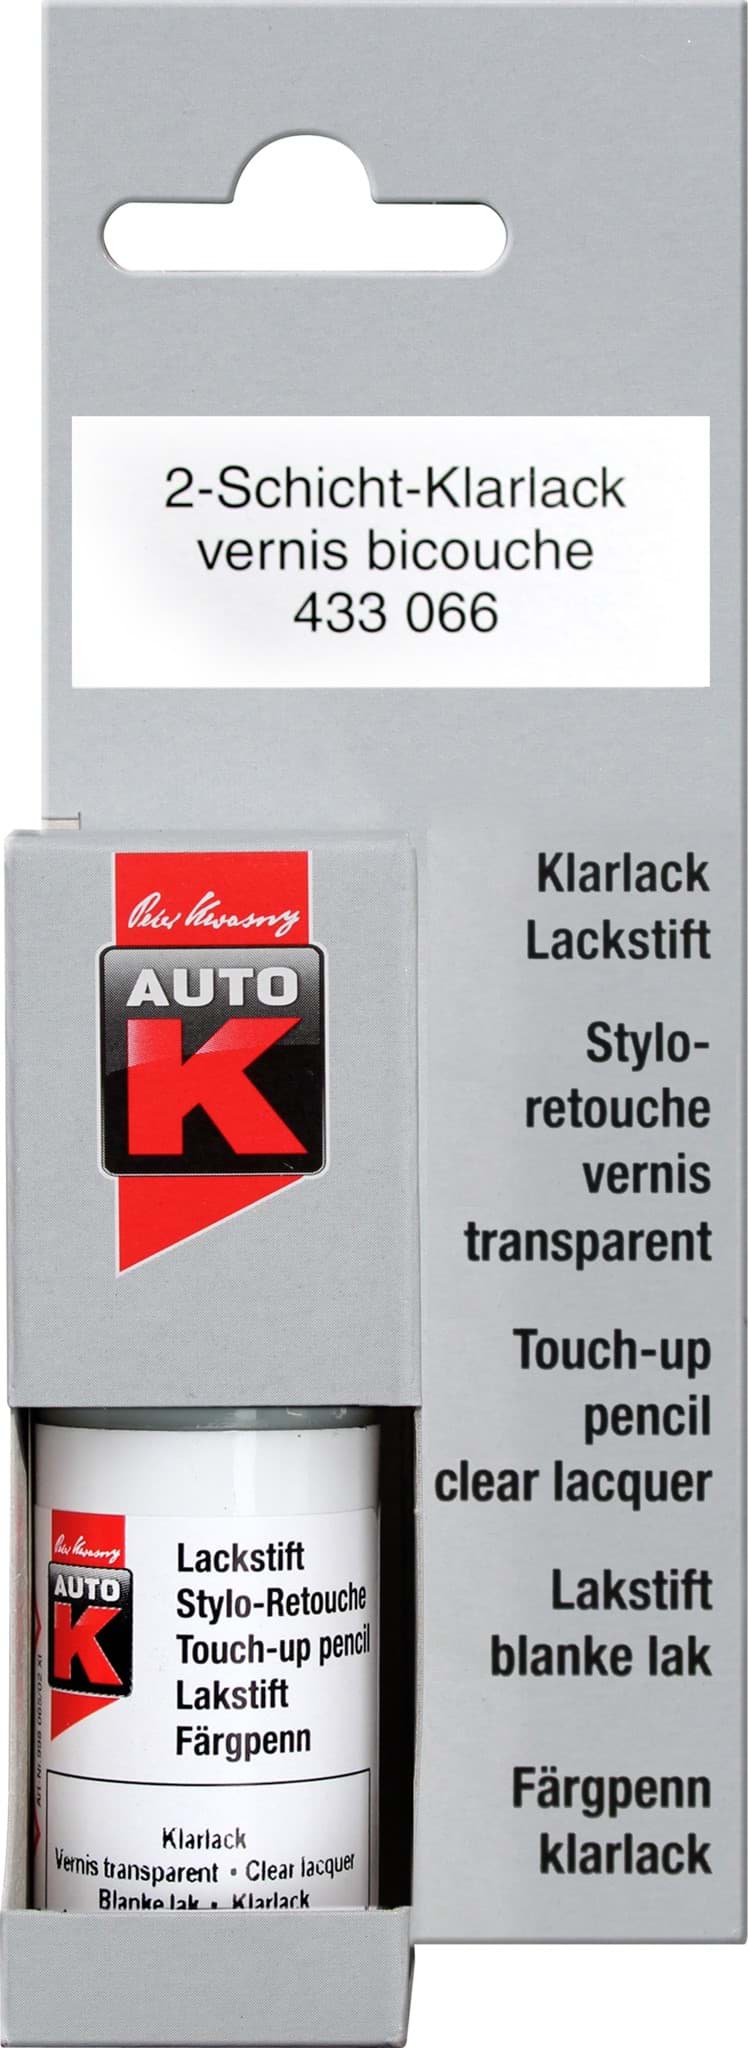 Picture of AutoK Lackstift Tupflack 2-Schicht-Klarlack 433066